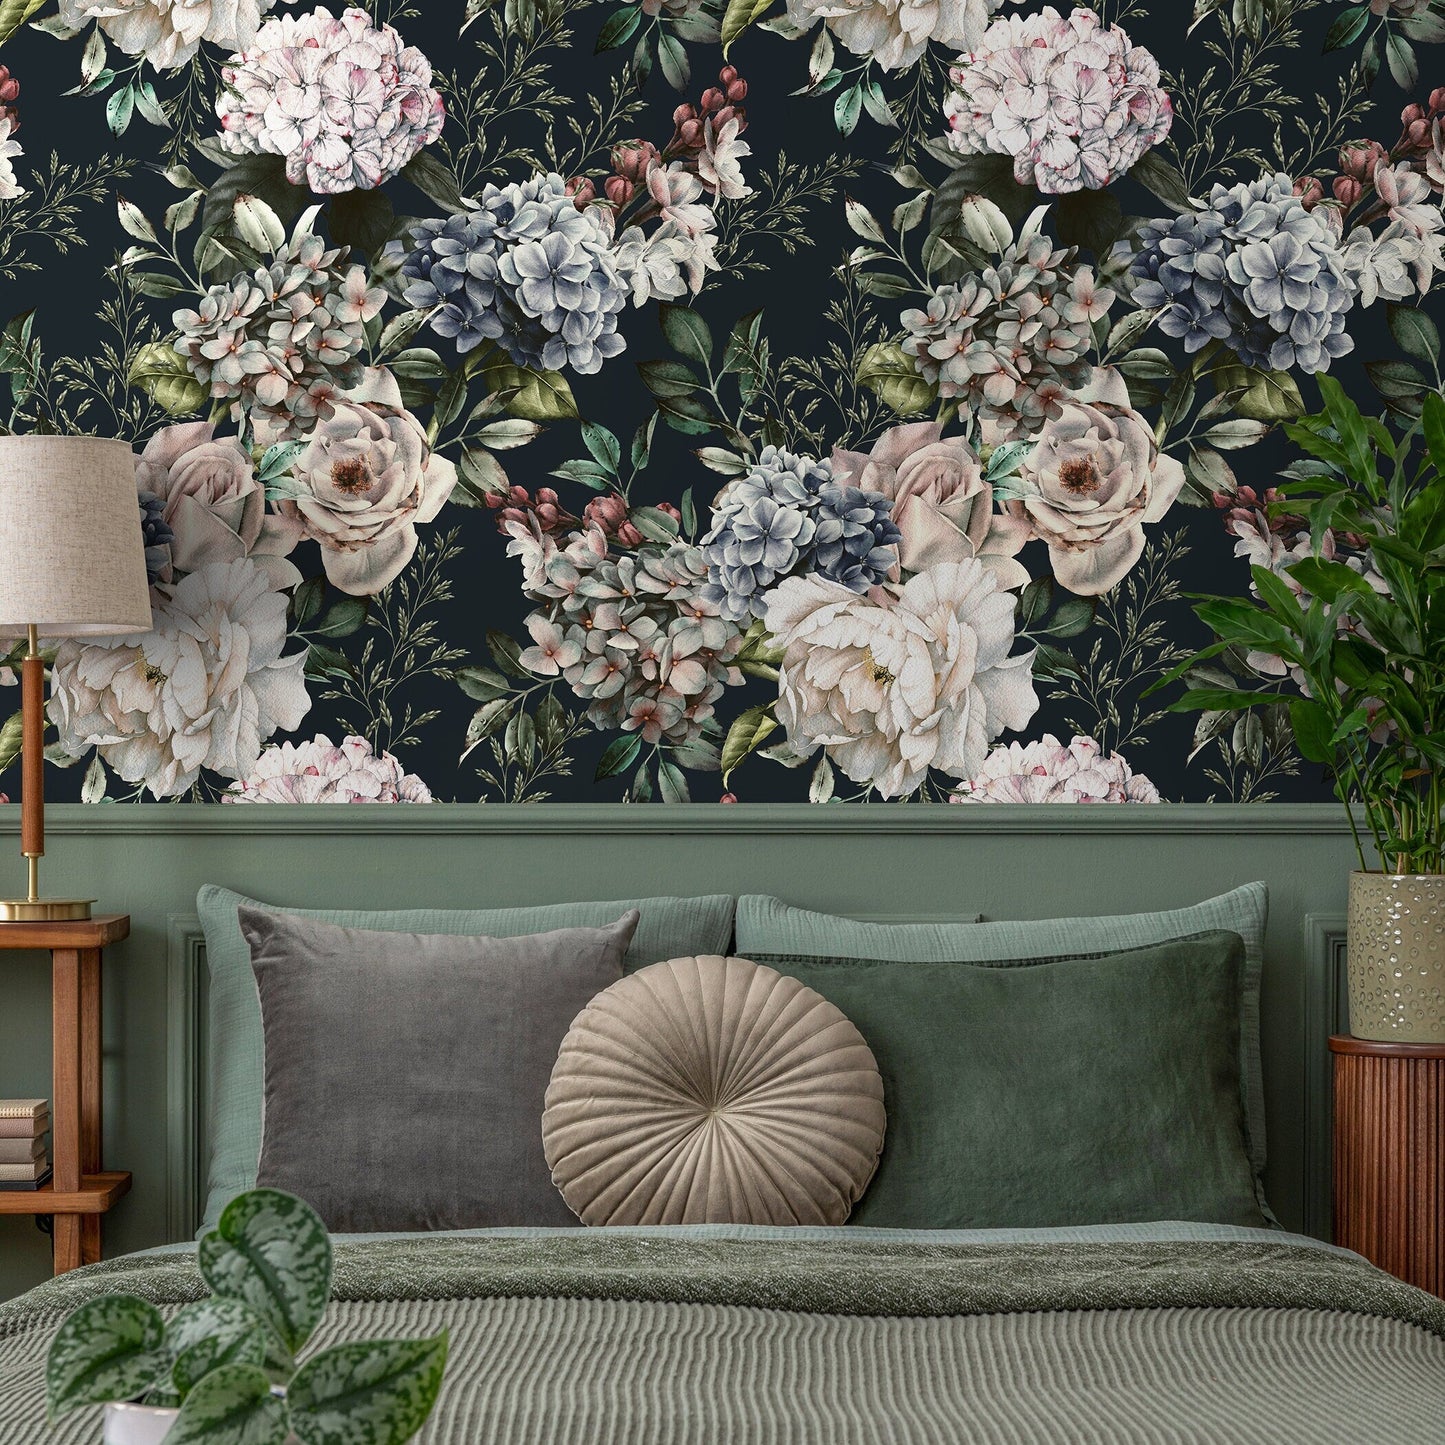 Floral Wallpaper Removable Wallpaper Home Decor Wall Art Wall Decor Room Decor / Vintage Roses Wallpaper - B231